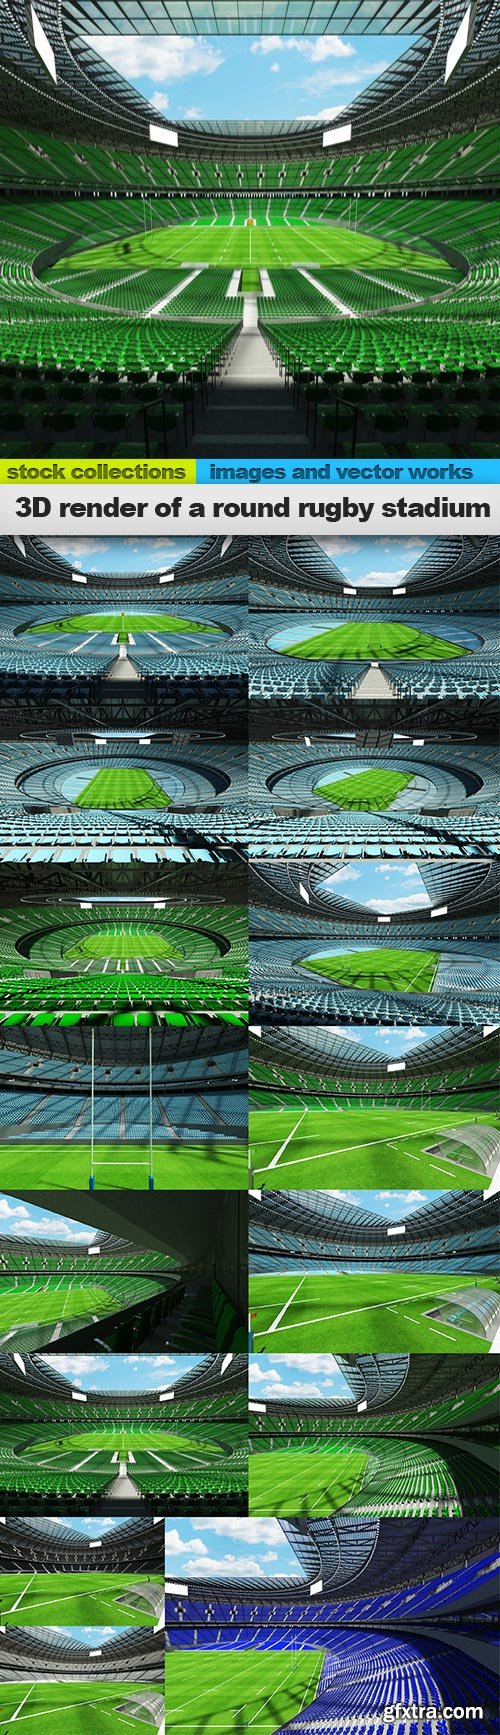 3D render of a round rugby stadium, 15 x UHQ JPEG